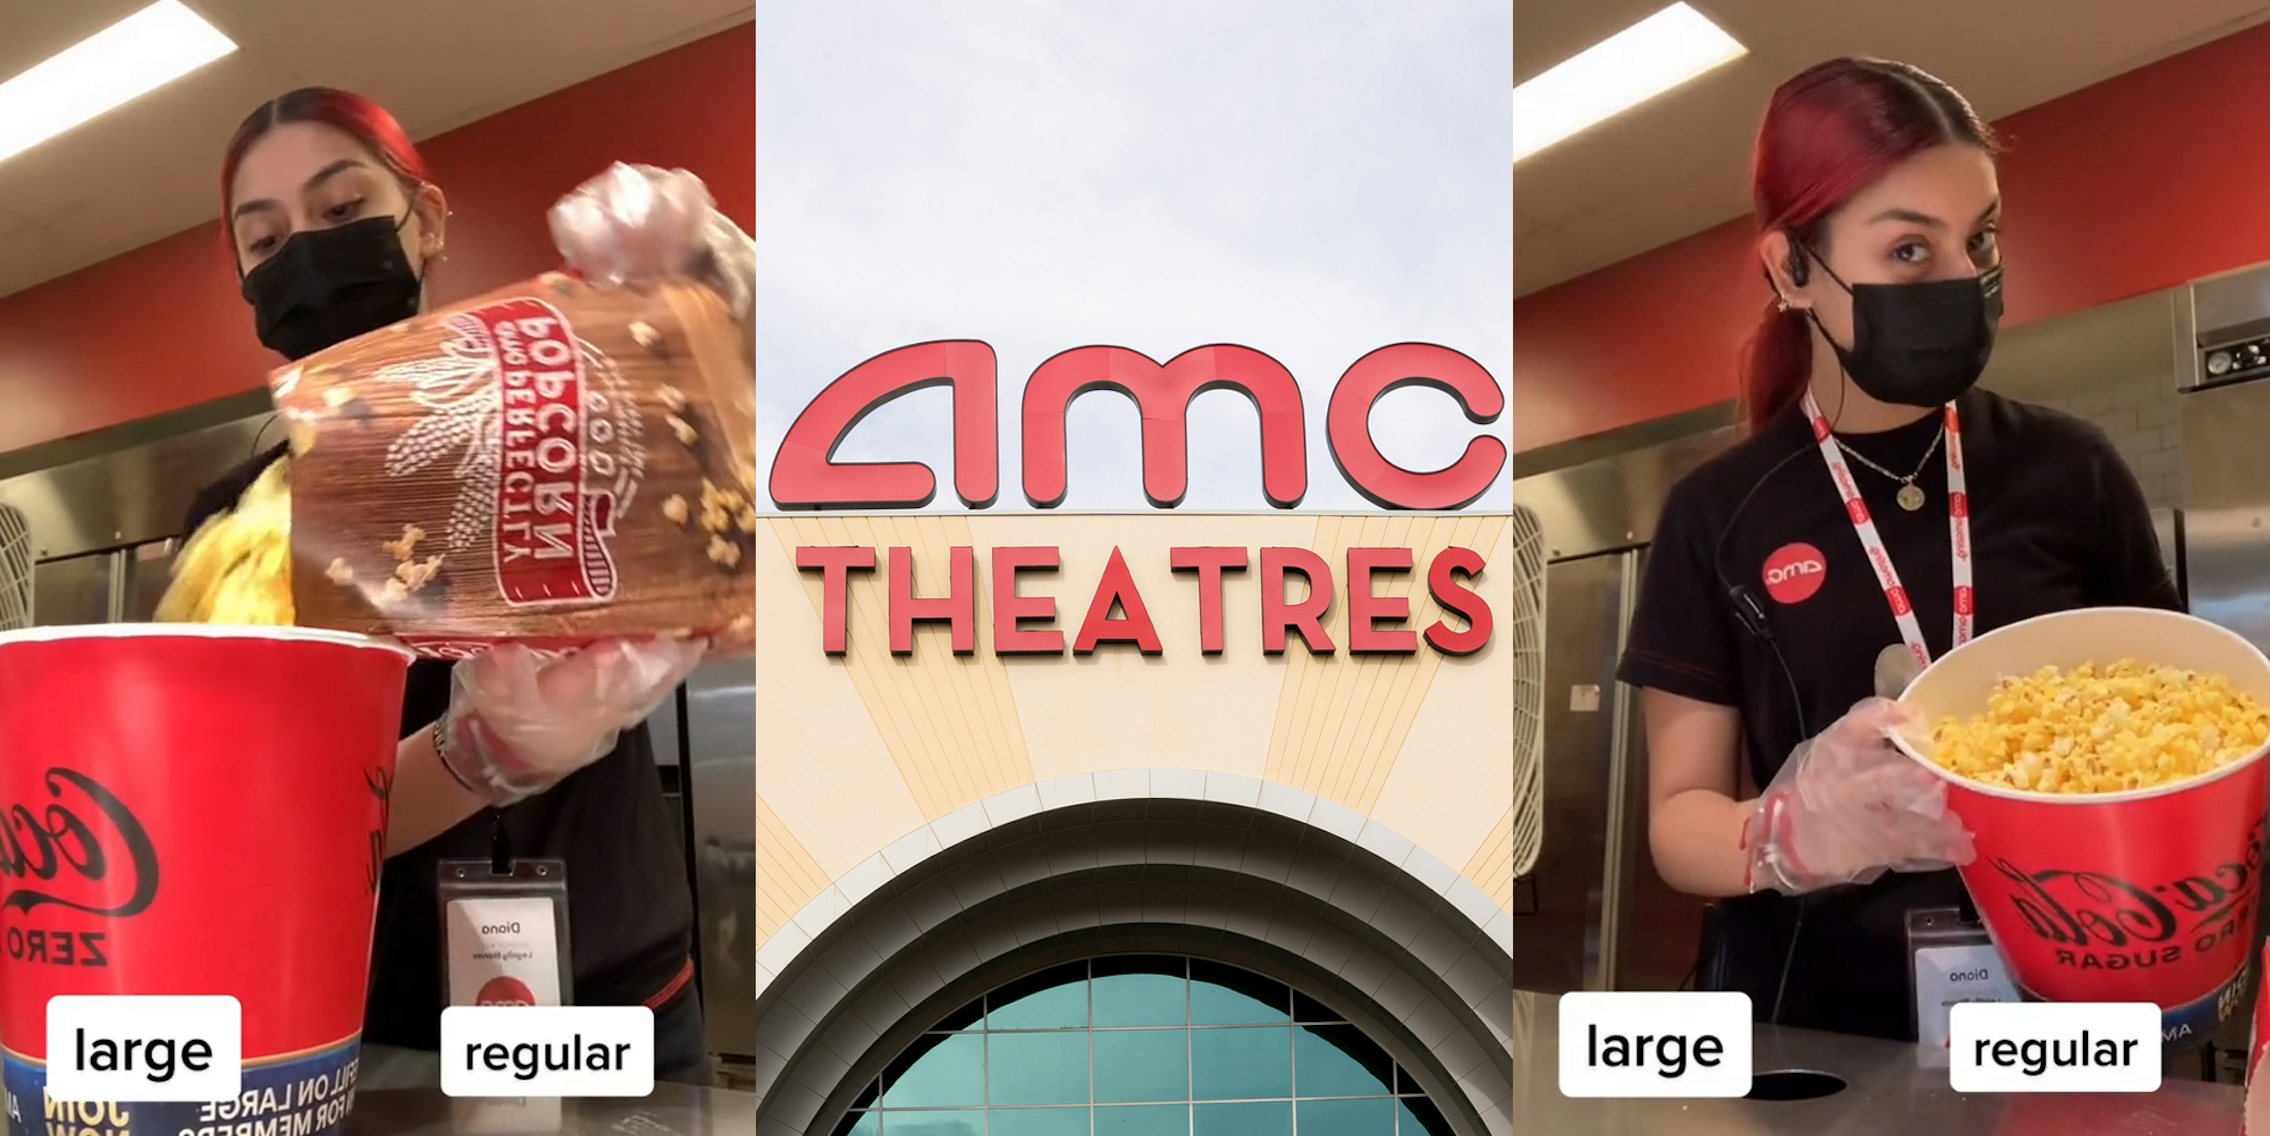 amc movie theater snacks